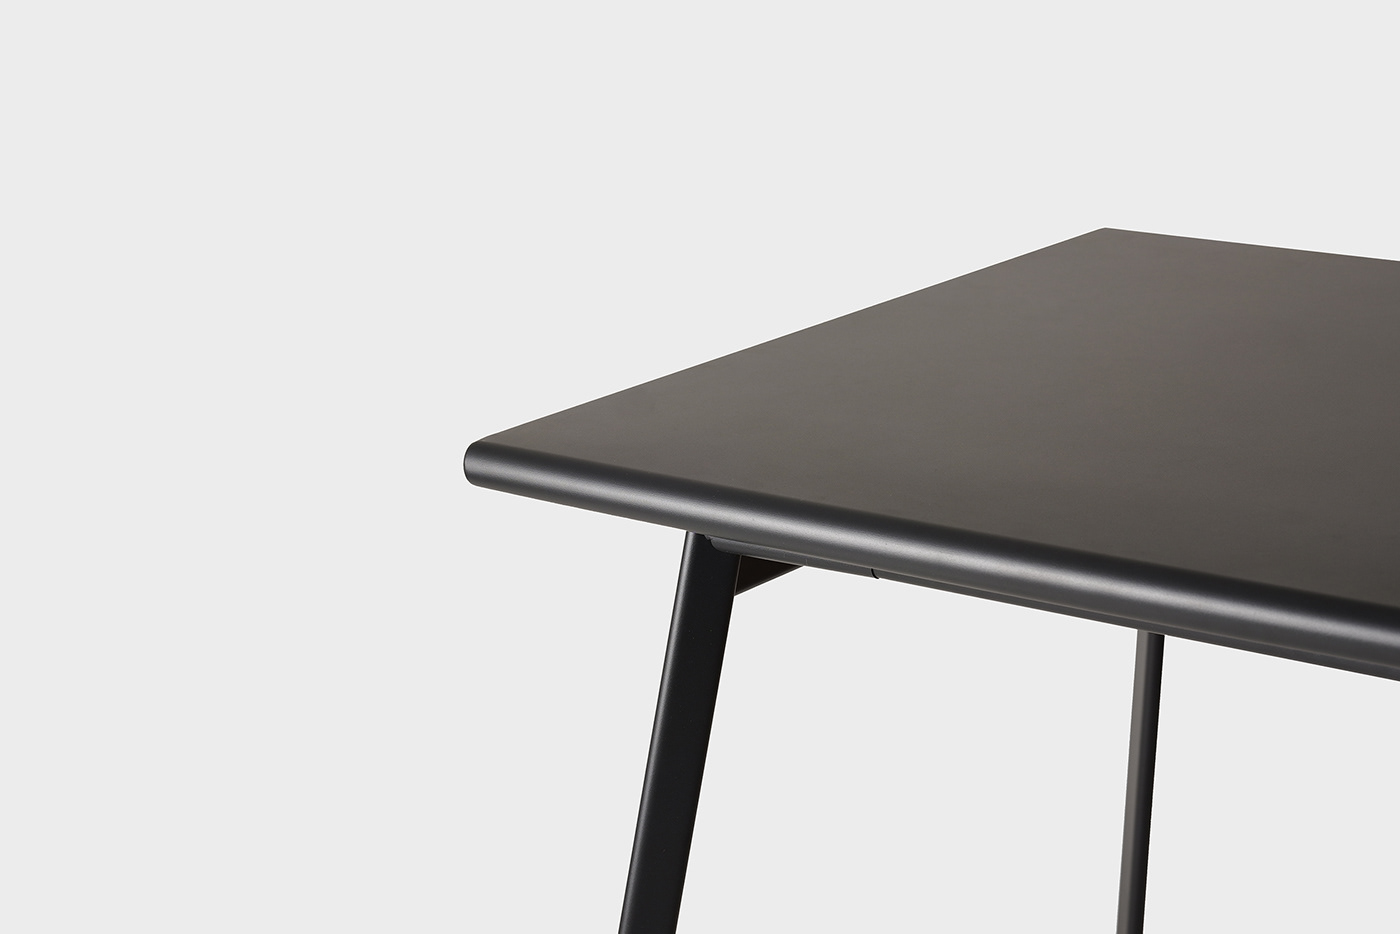 furniture product design  industrial design  table steel hanger table legs